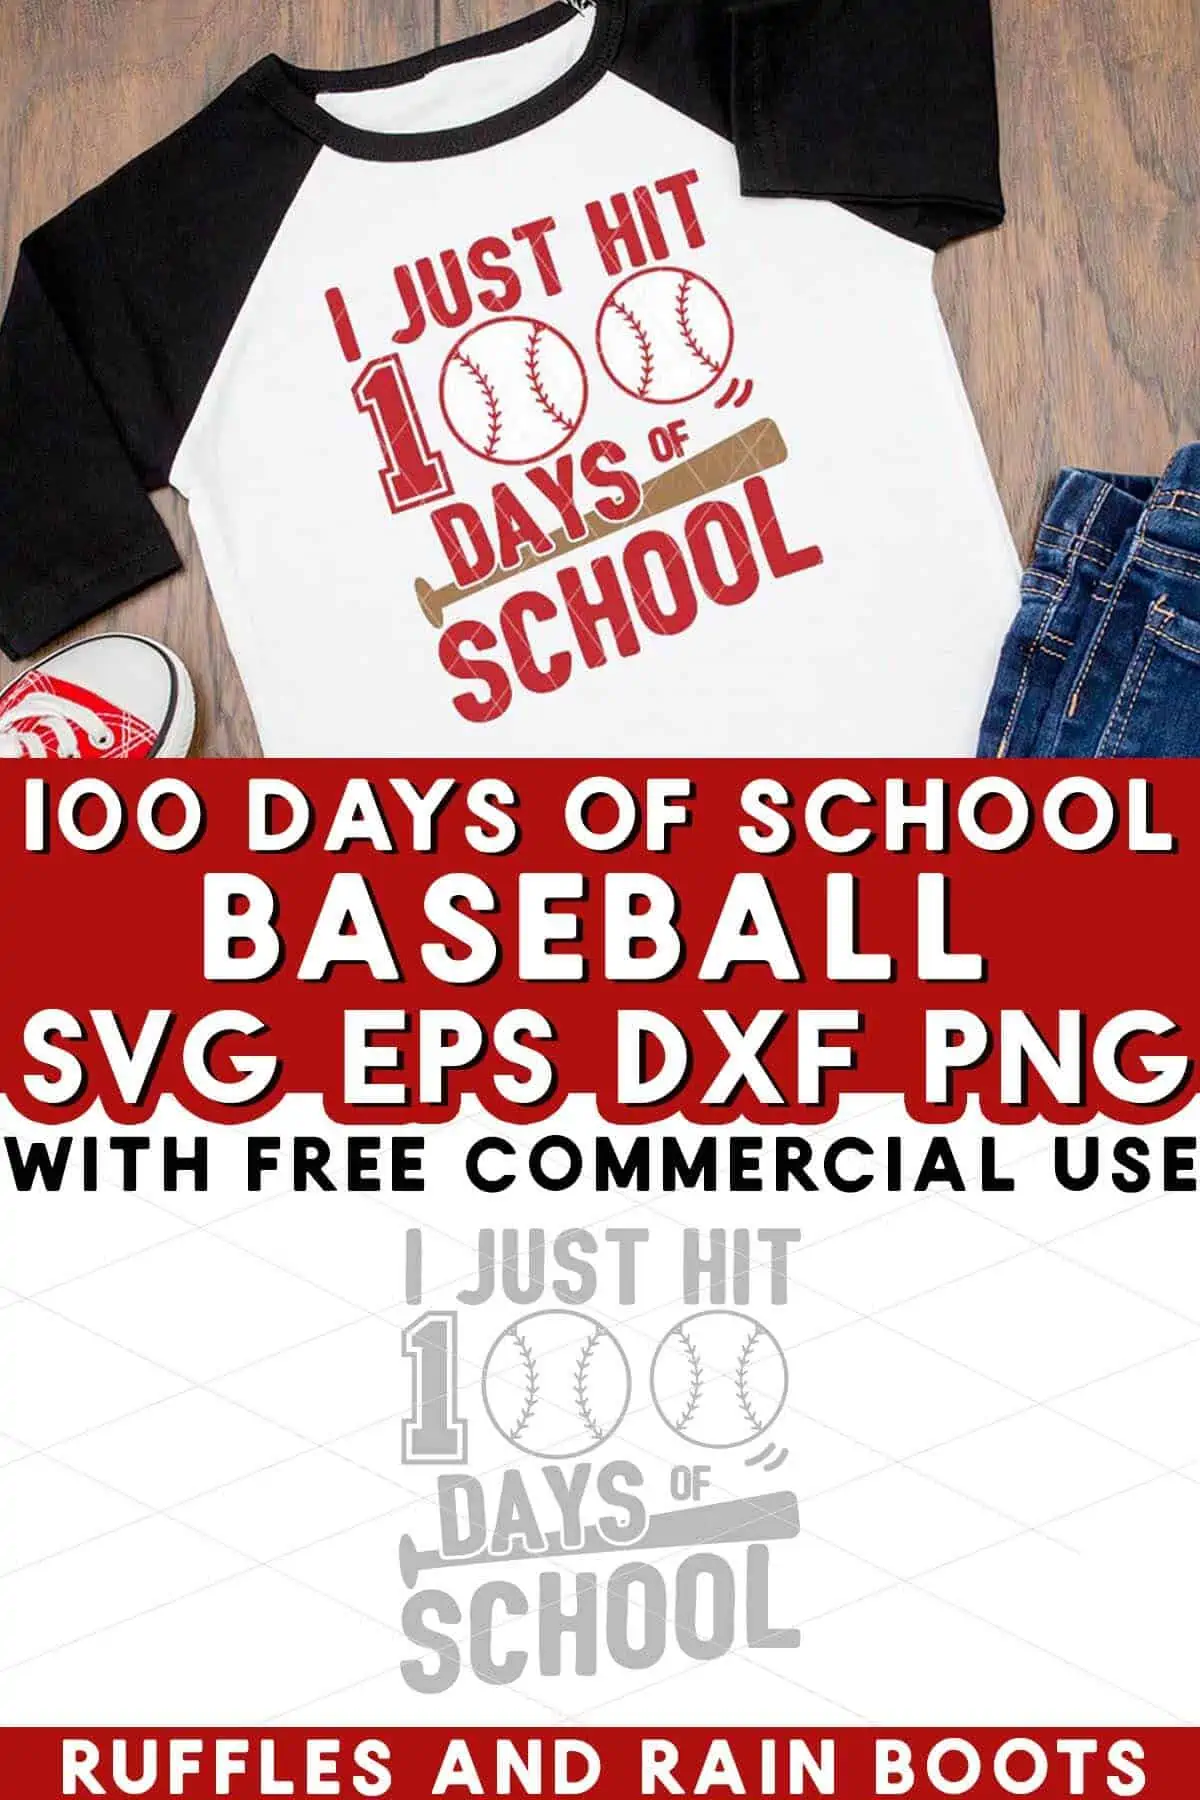 Split vertical image showing a black sleeve raglan shirt with 100 days of school and baseballs.